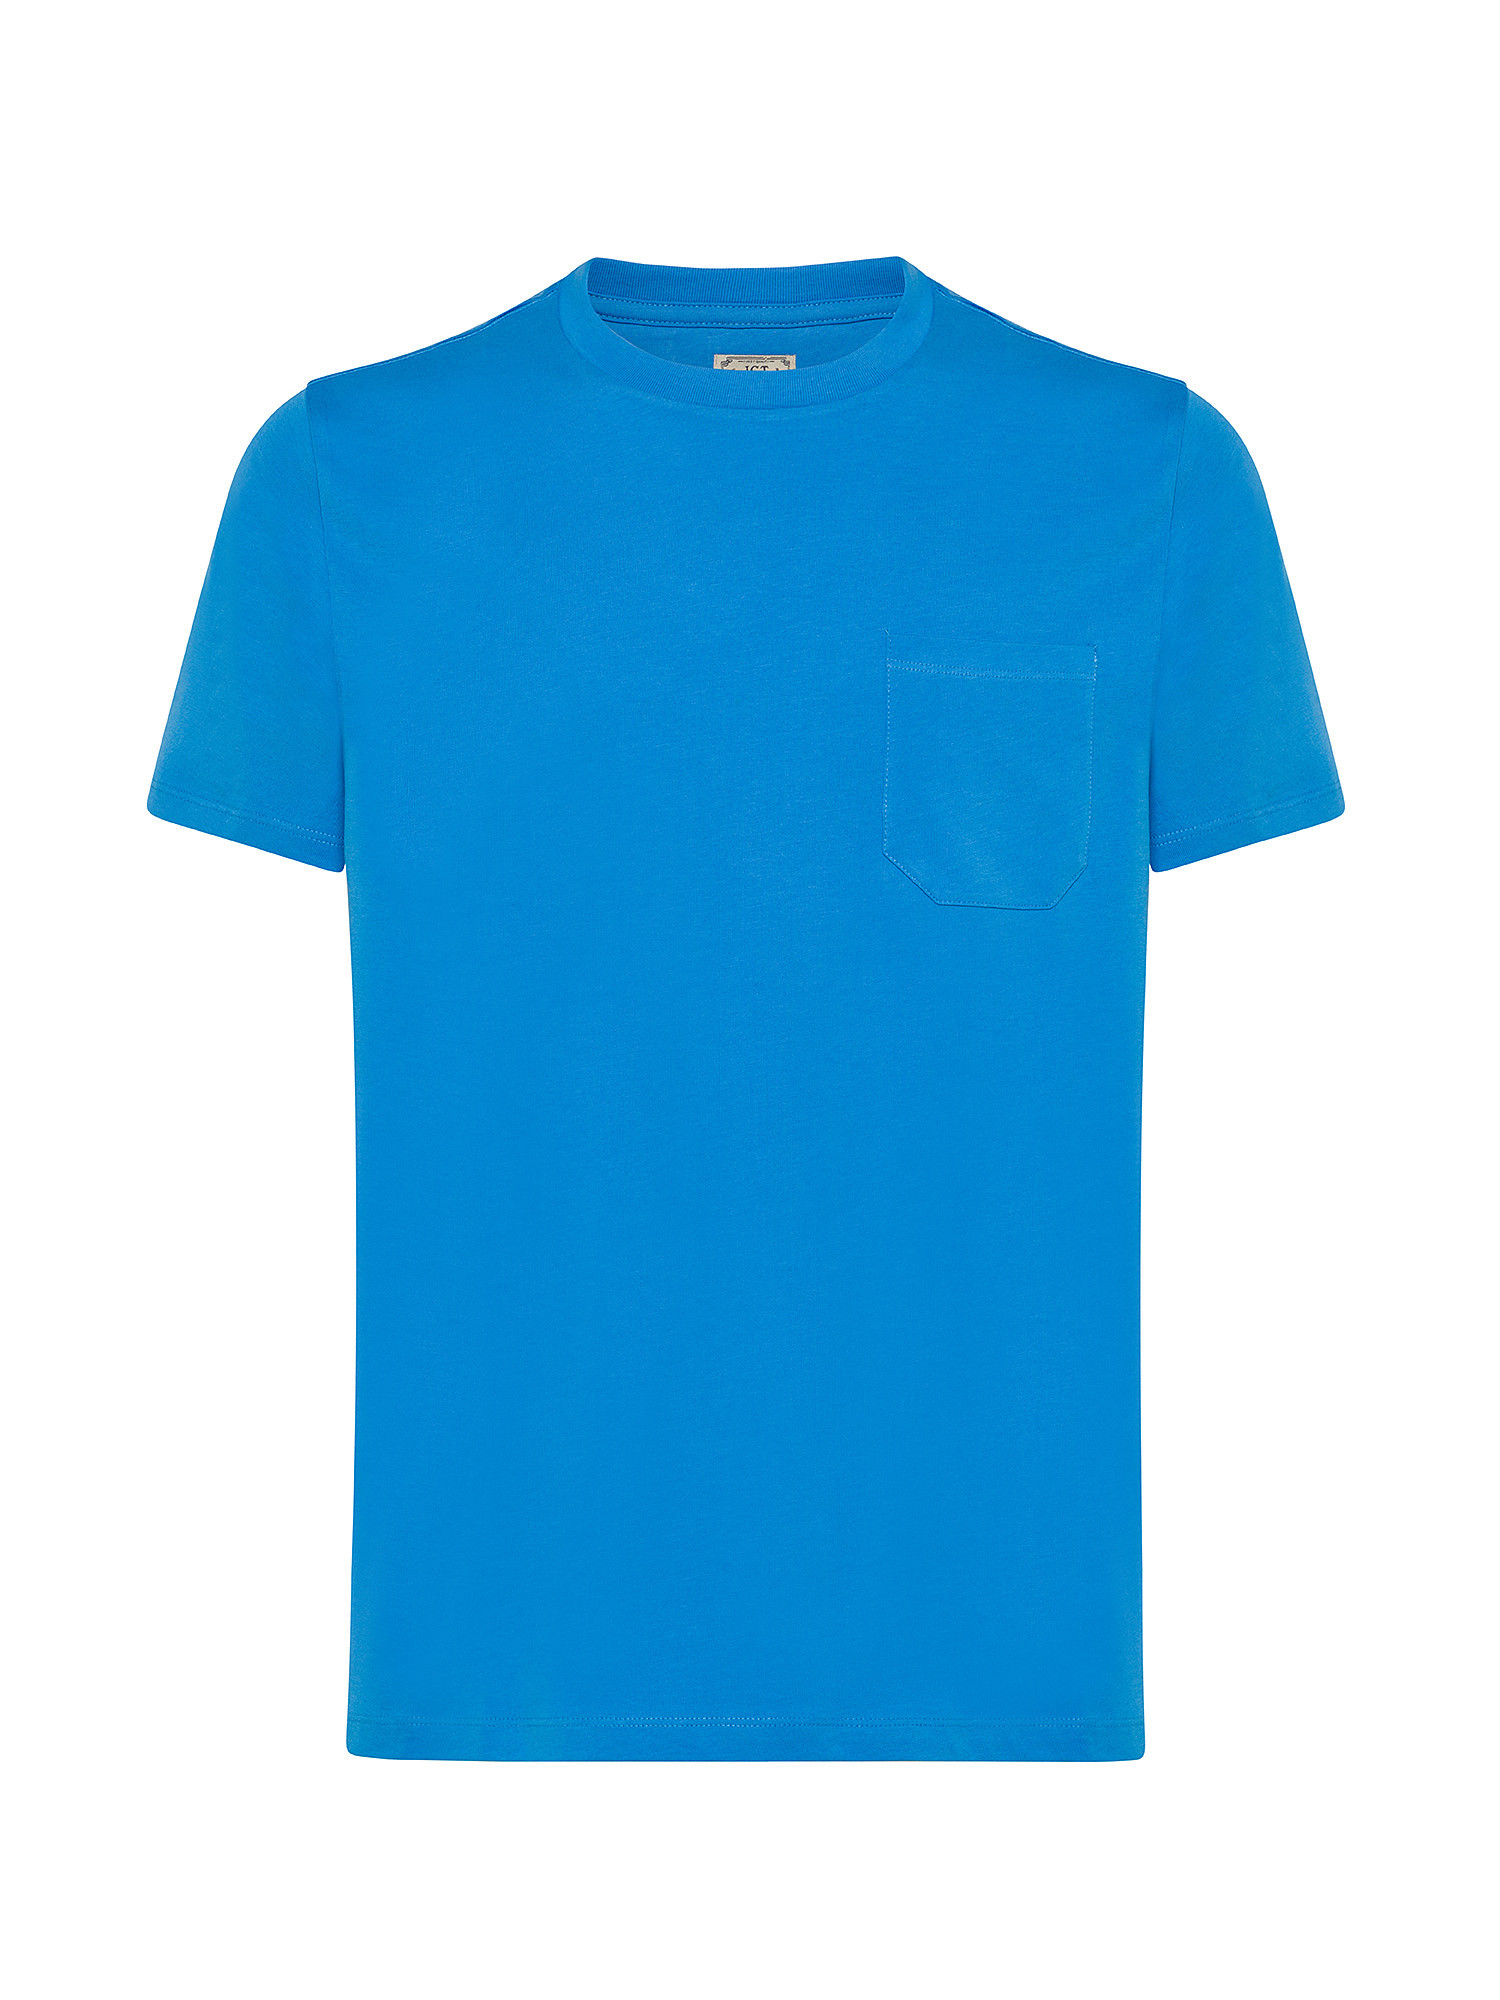 JCT - Pure supima cotton T-shirt, Light Blue, large image number 0